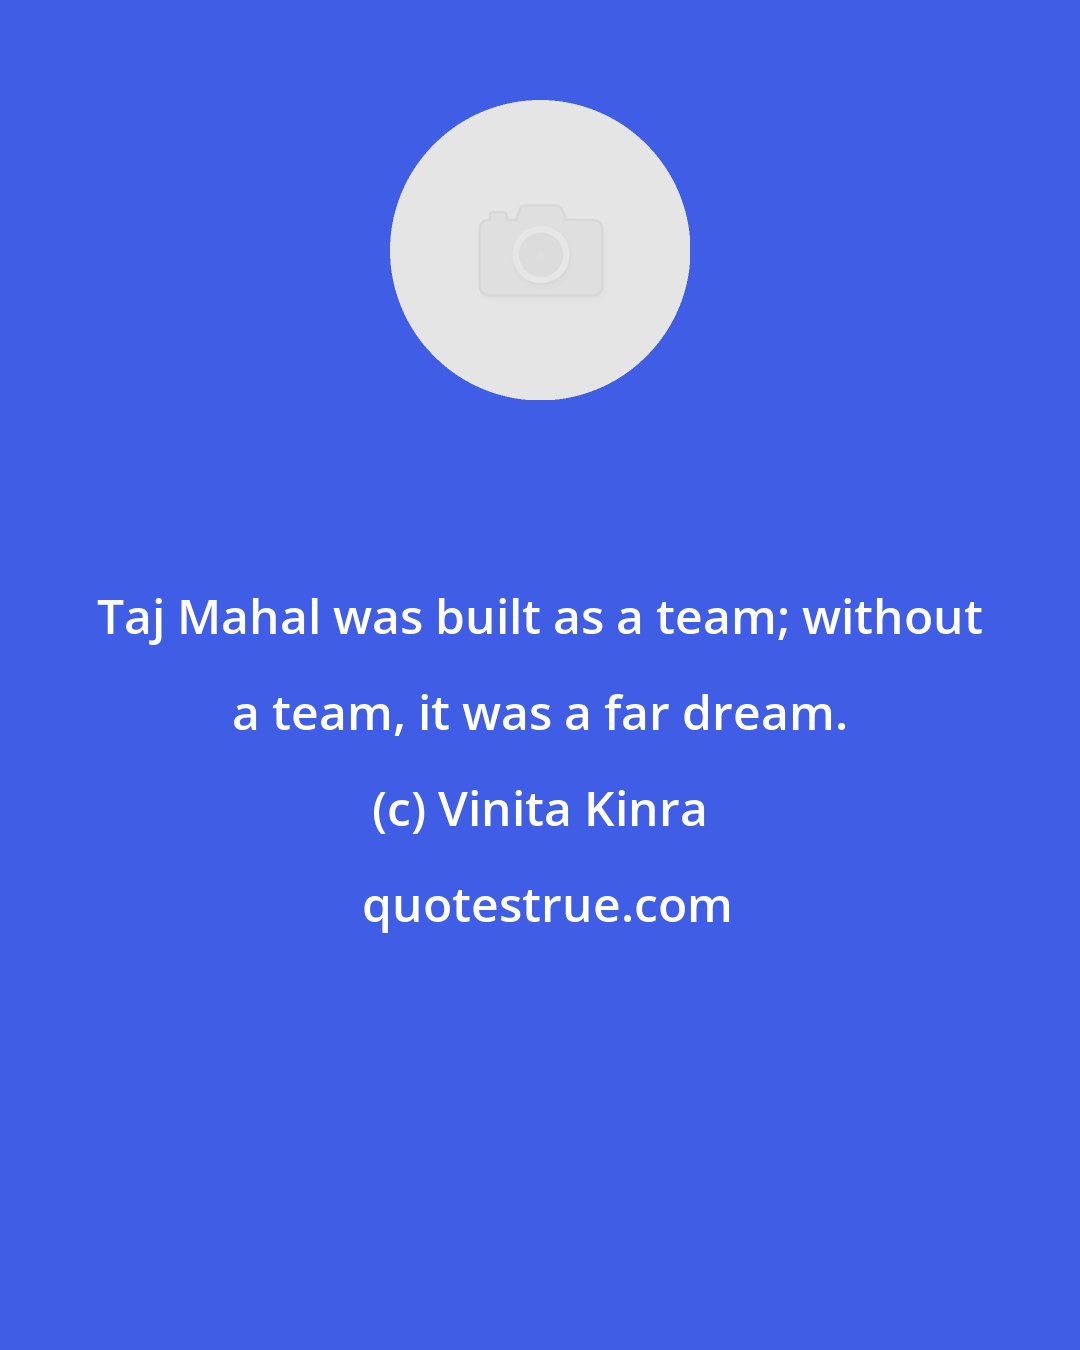 Vinita Kinra: Taj Mahal was built as a team; without a team, it was a far dream.